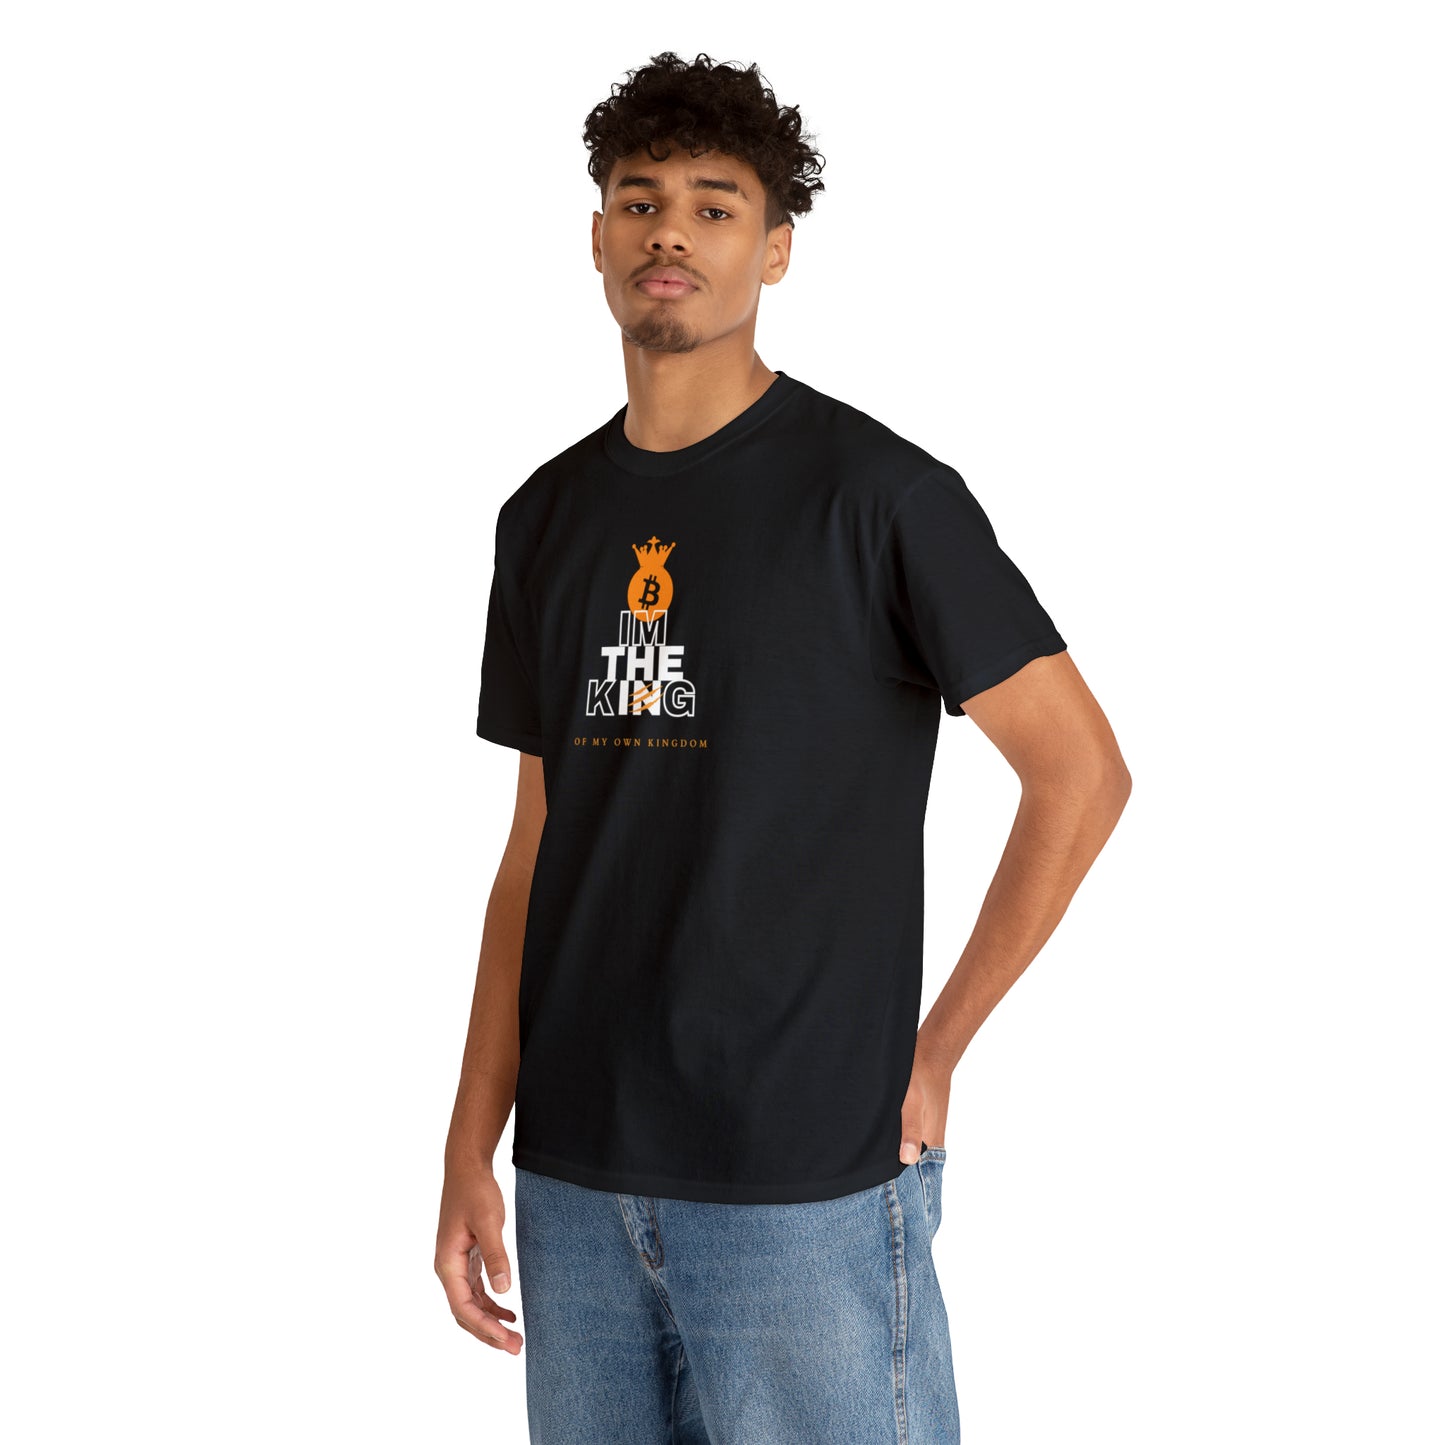 Unisex Bitcoin King of Kingdom Short Sleeve T-shirt